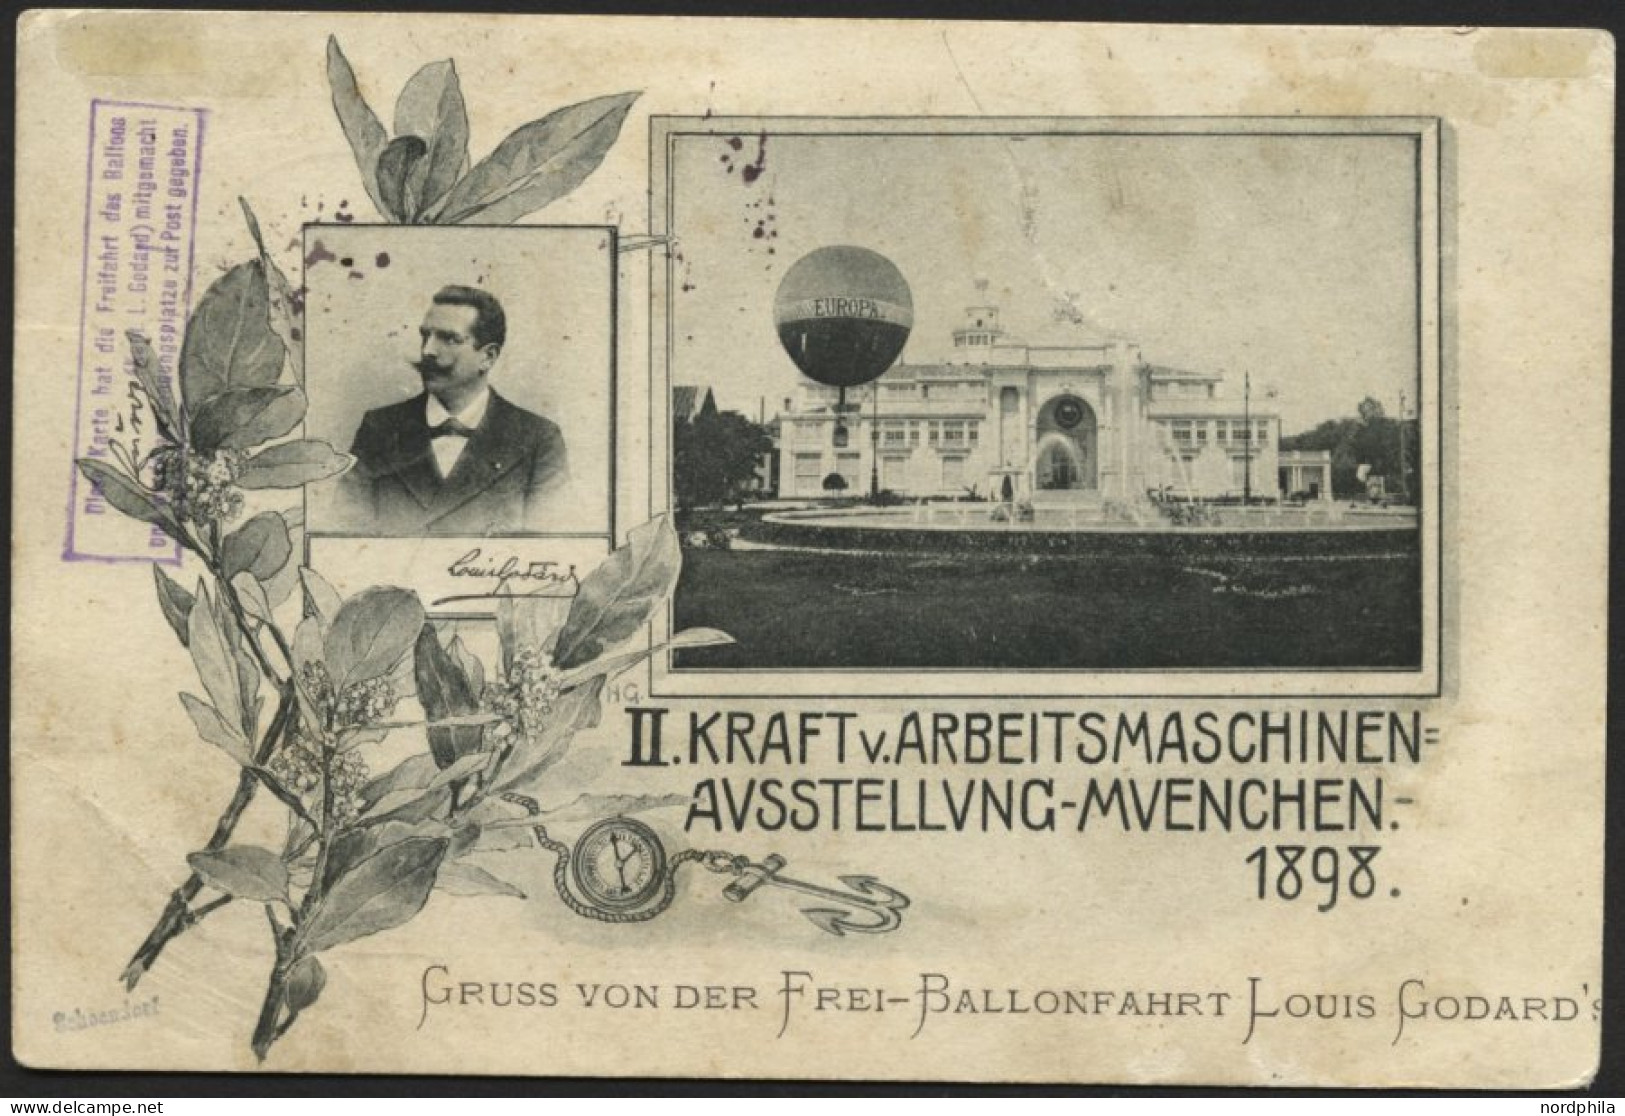 BALLON-FAHRTEN 1897-1916 15.8.1898, Freifahrt Des Ballons EUROPA Mit Kapitän Louis Godard, Aufstieg Am 1. Ausstellungsta - Montgolfier